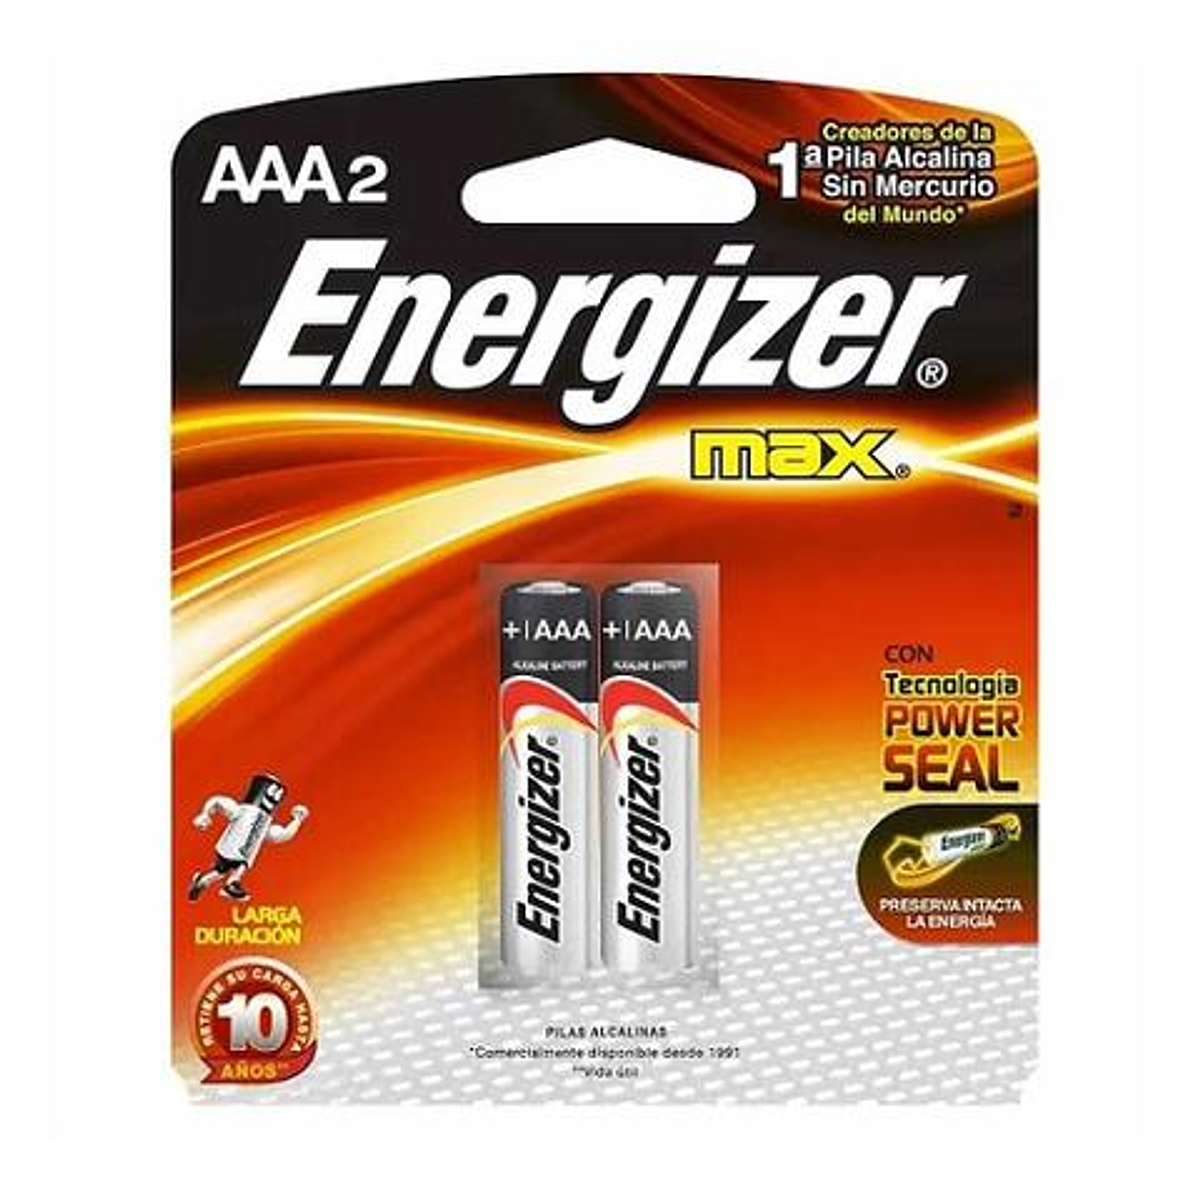 Ааа 1.5 v. Energizer p28k. Energizer p28k купить. Energizer p28k цена.